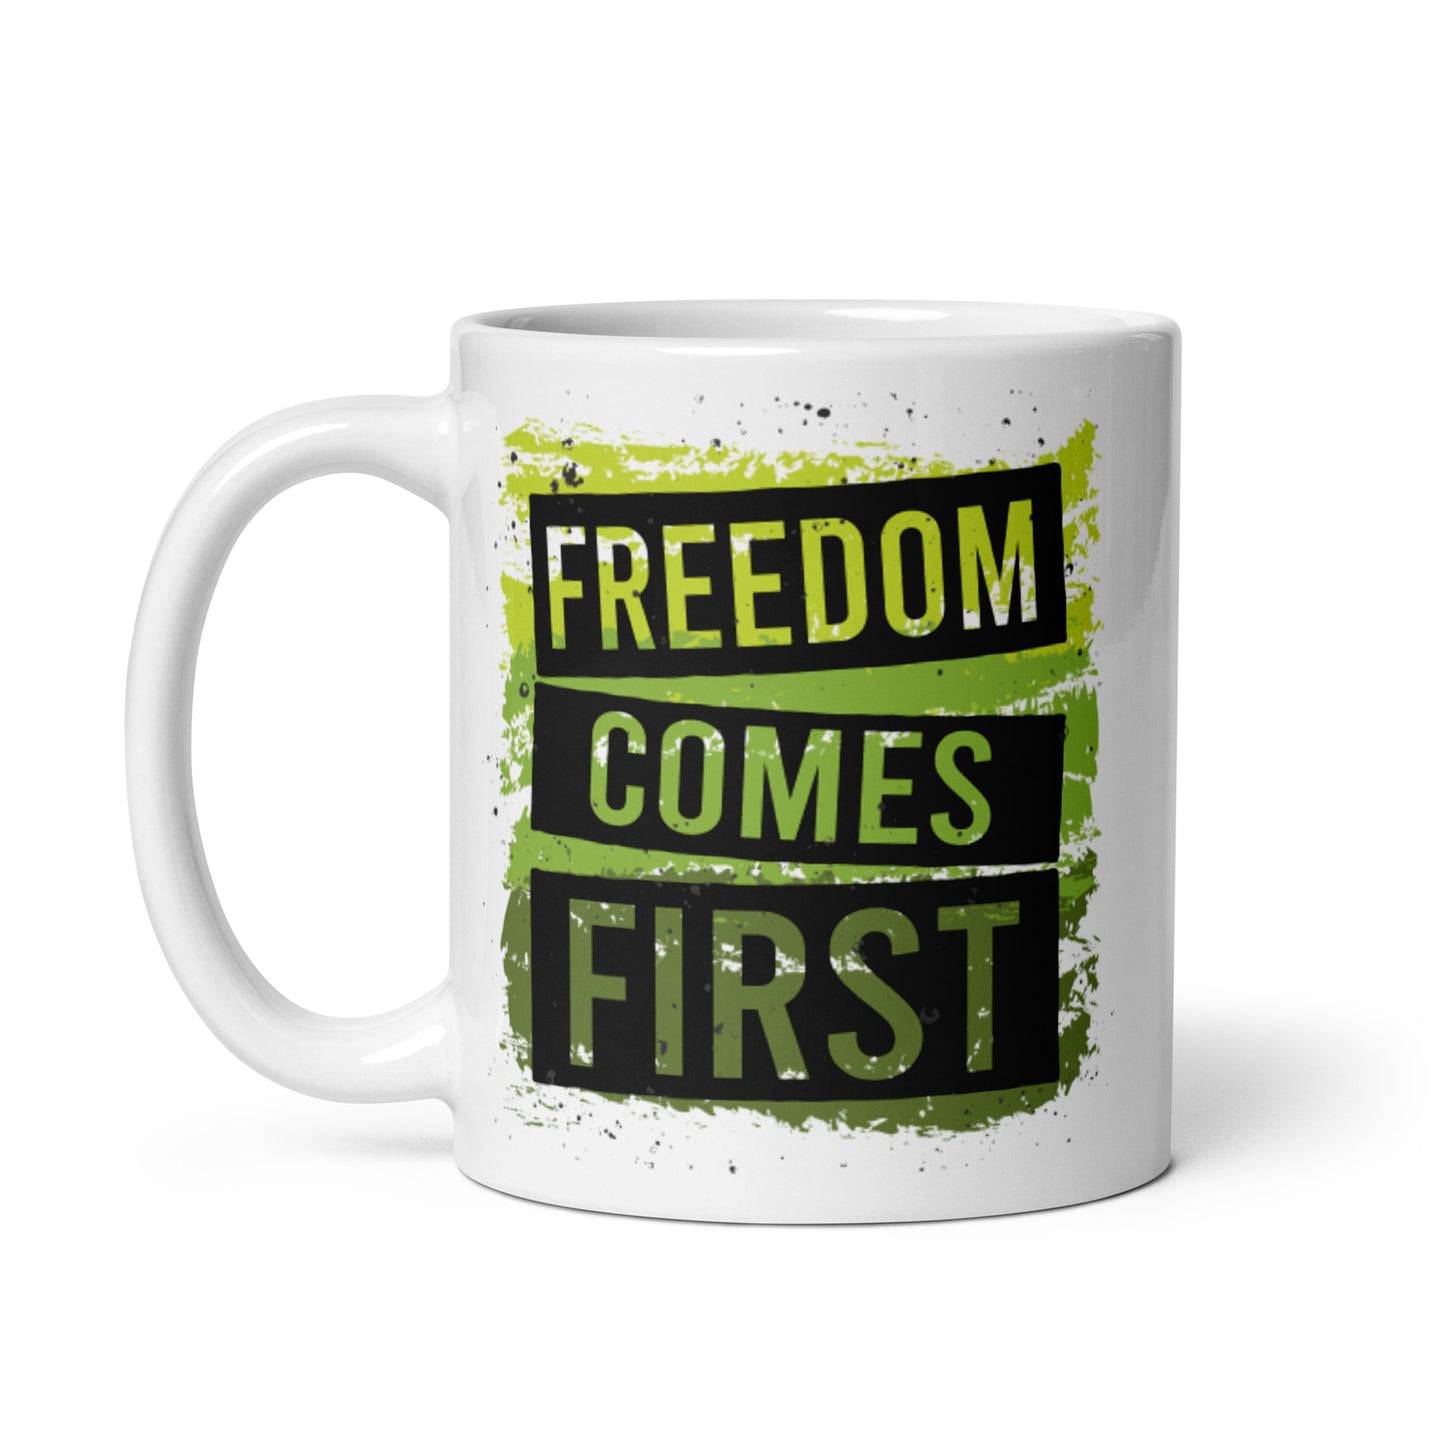 Freedom Comes First mug